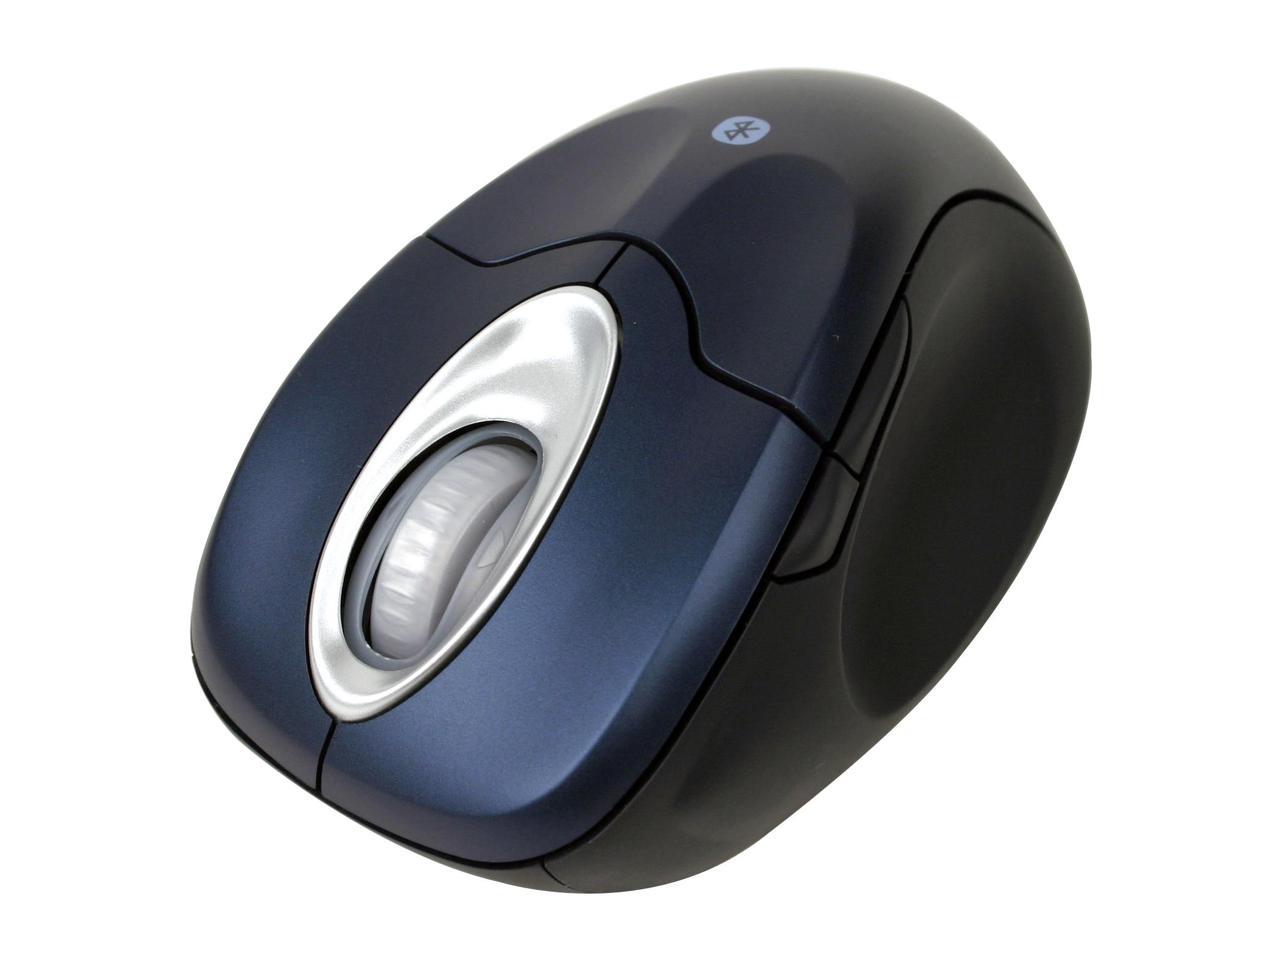 microsoft wireless optical mouse driver intellipoint